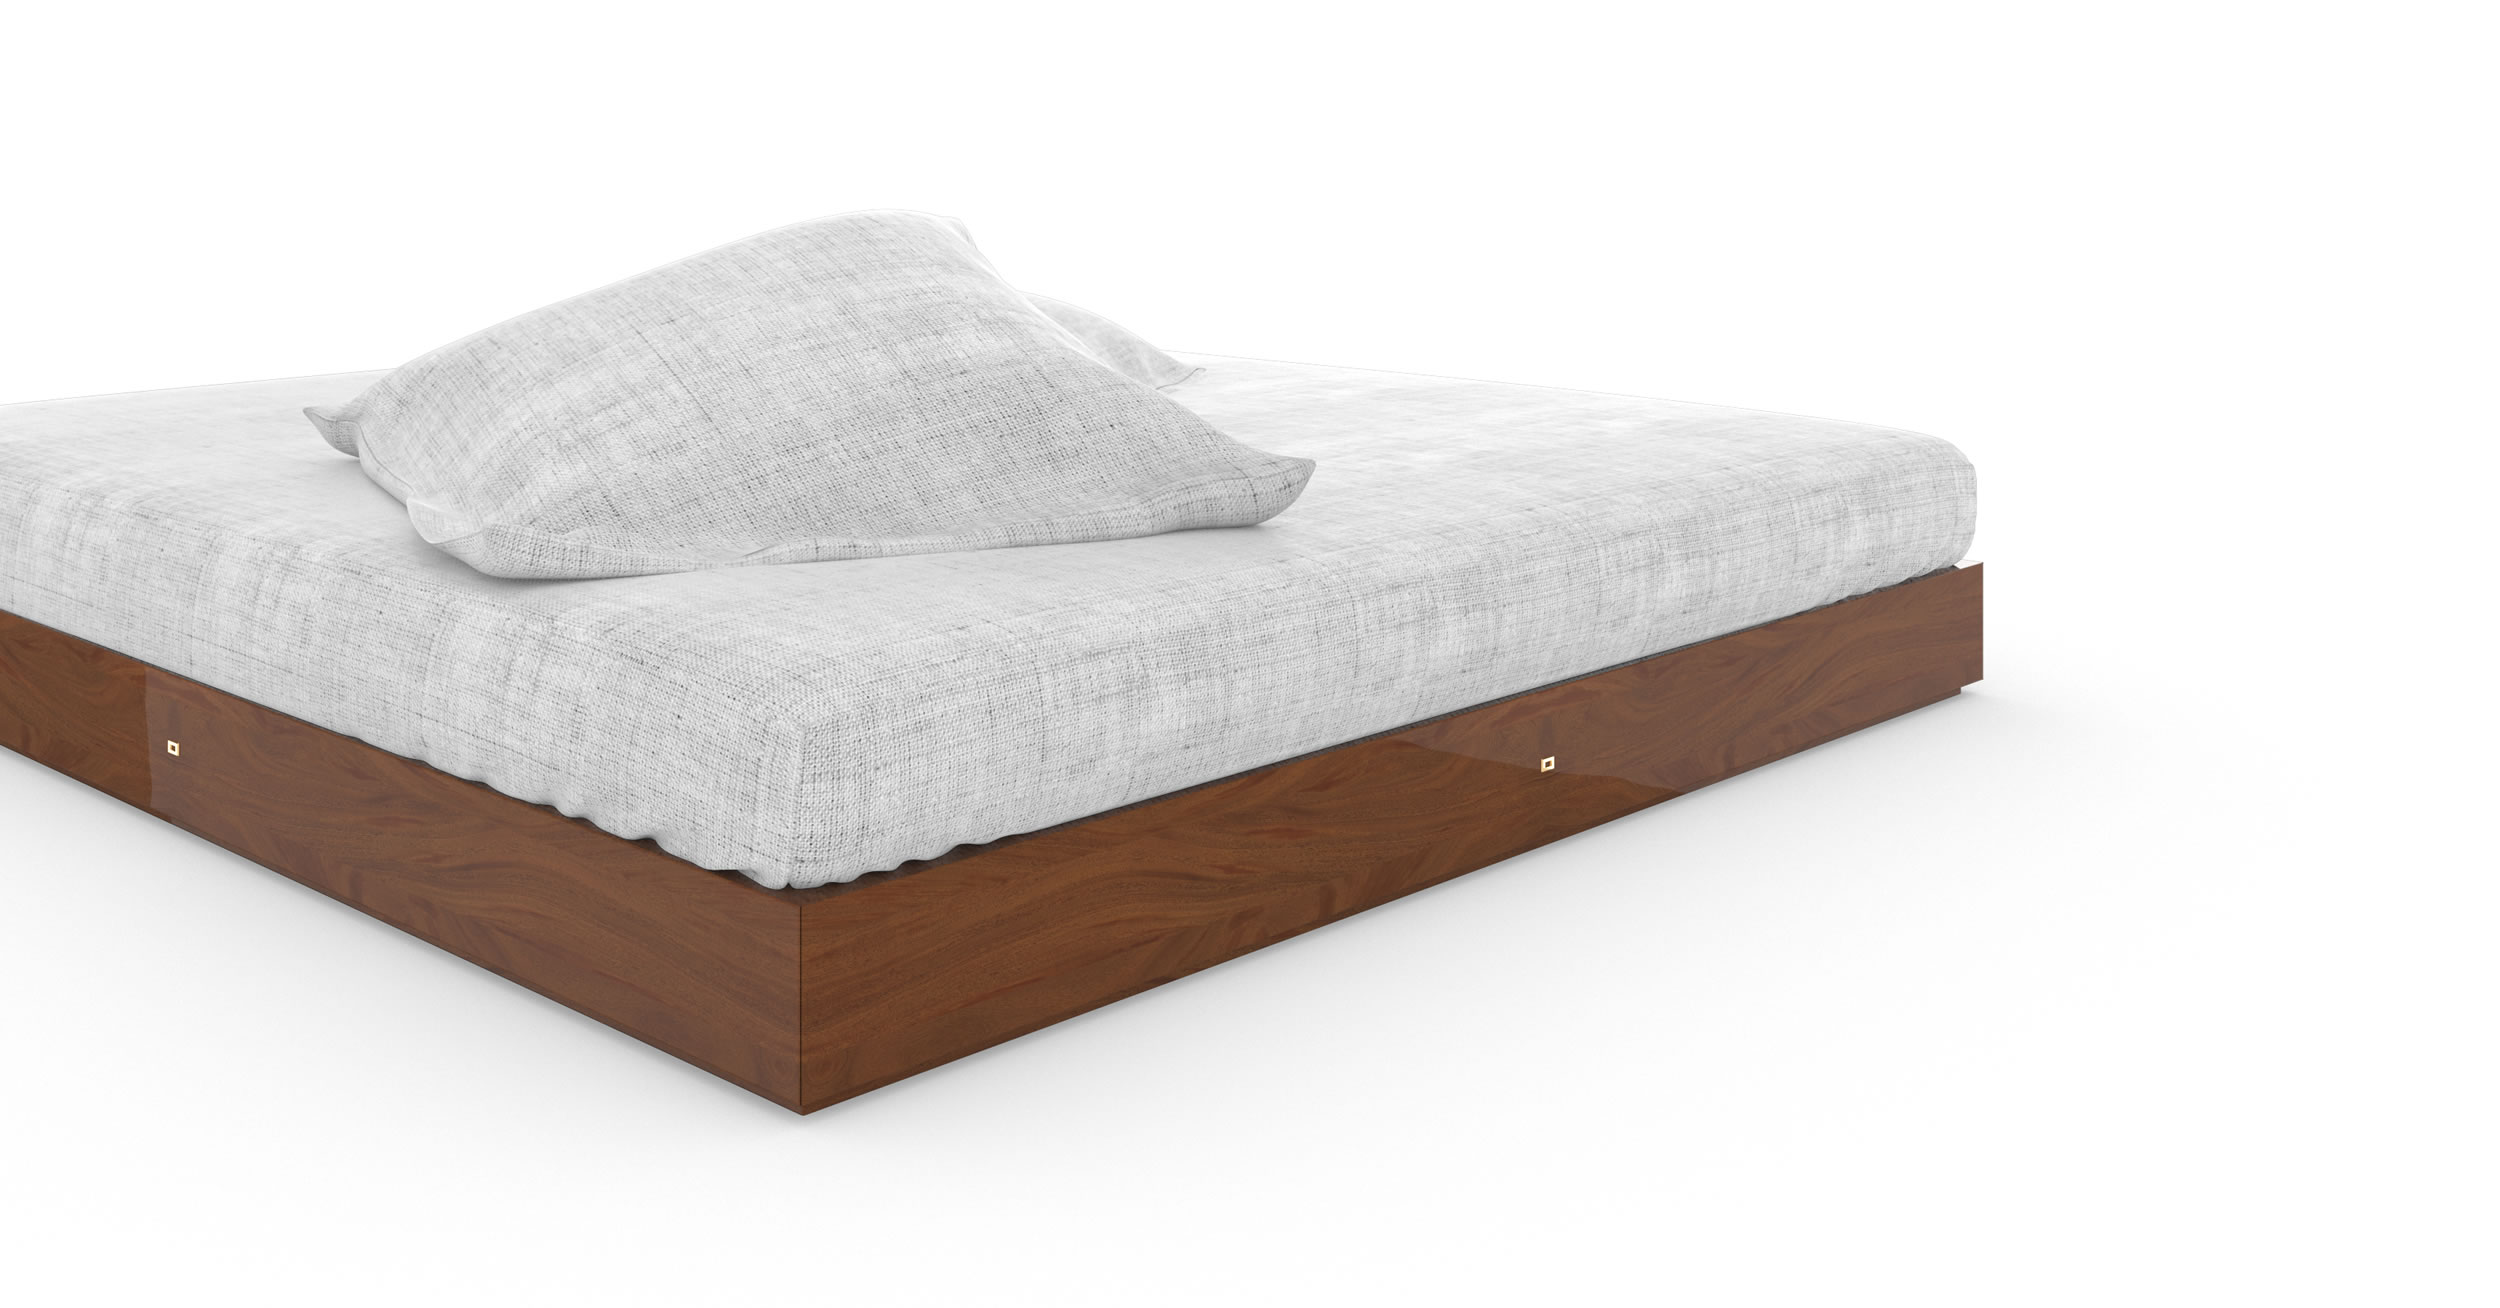 Design Bed Refined Mahogany Hardwood Select Handcrafted Design Premium InteriorFELIX SCHWAKE